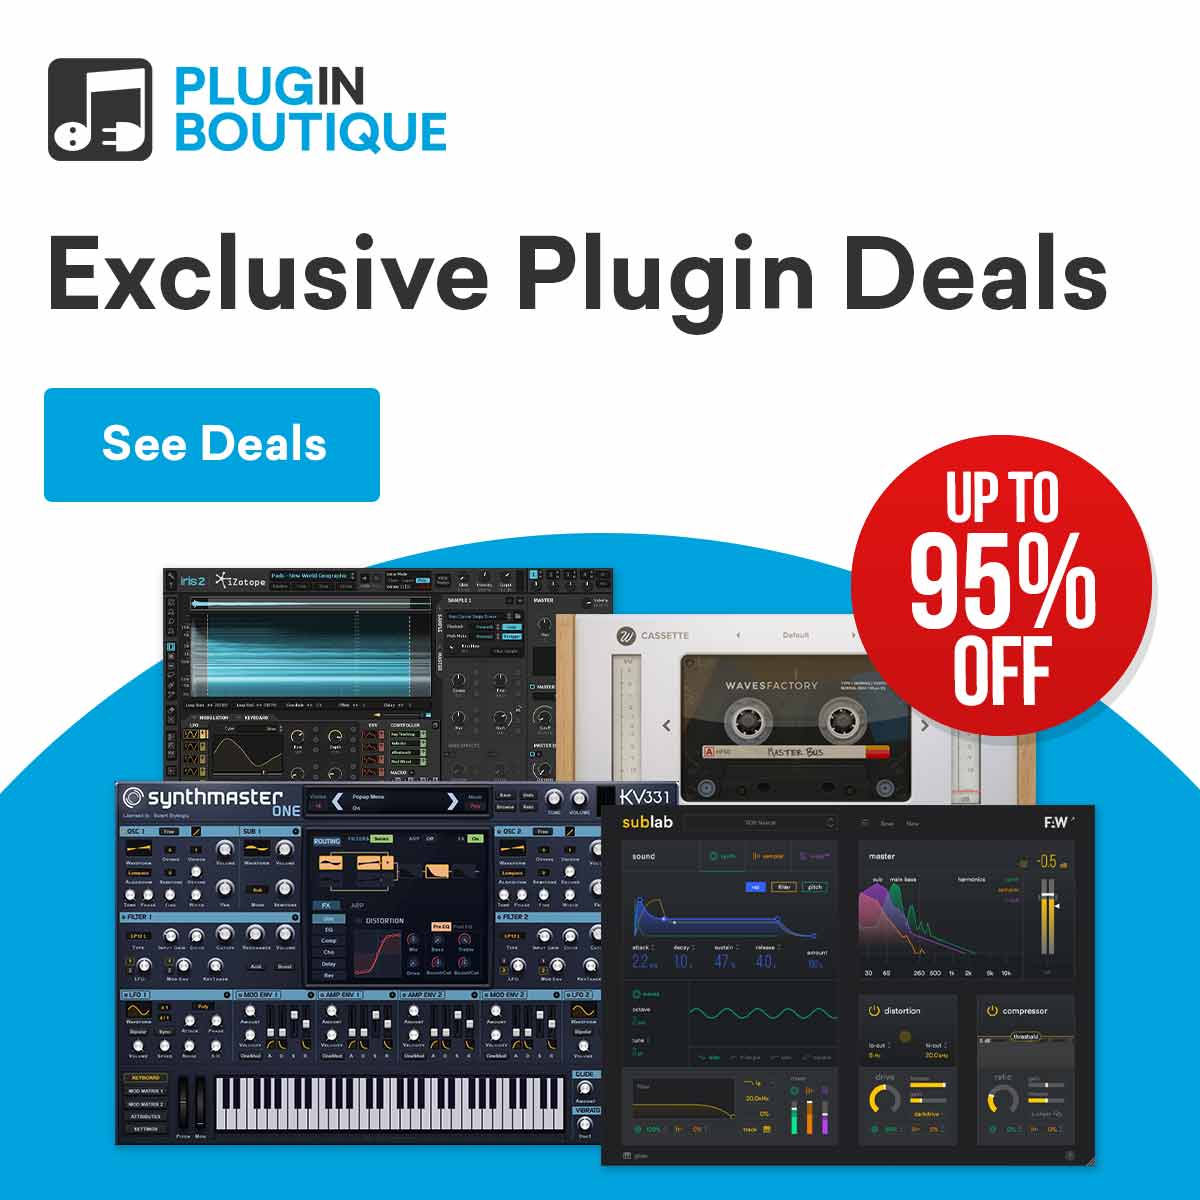 Music Software Bundles from Pluginboutique.com